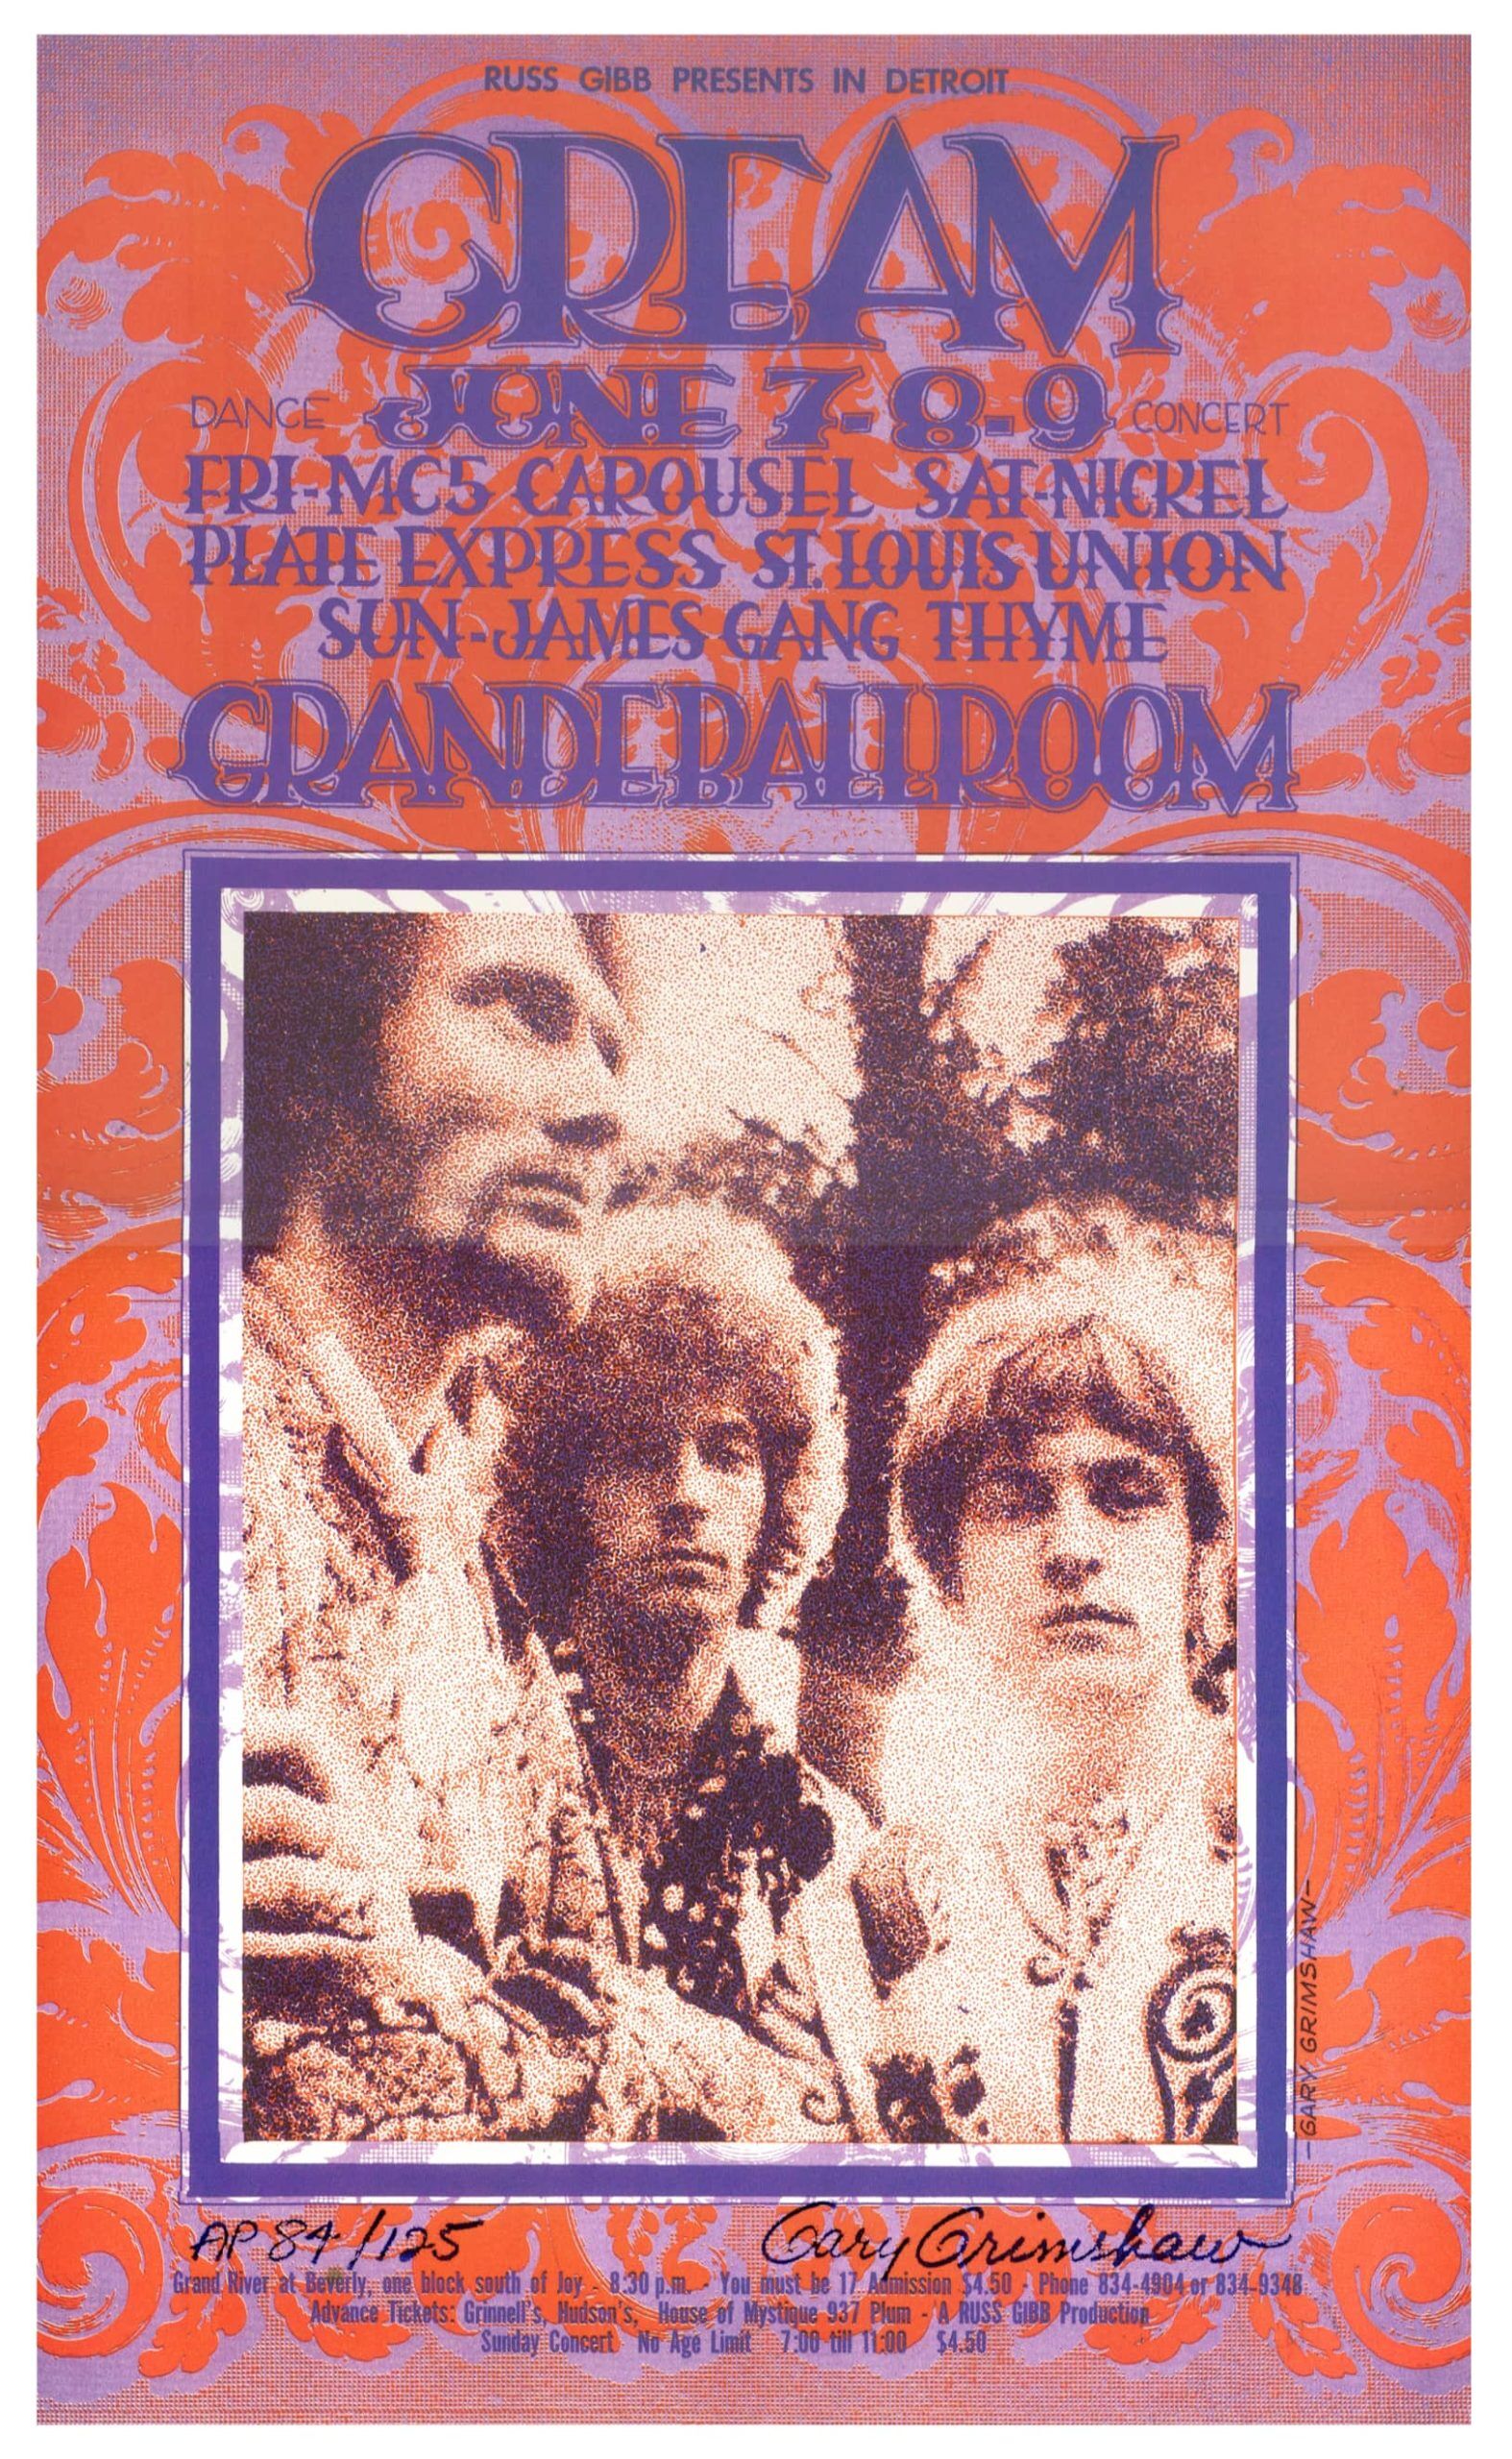 Cream Poster 1968 Grande Ballroom Gary Grimshaw signed 2nd Printing 2005